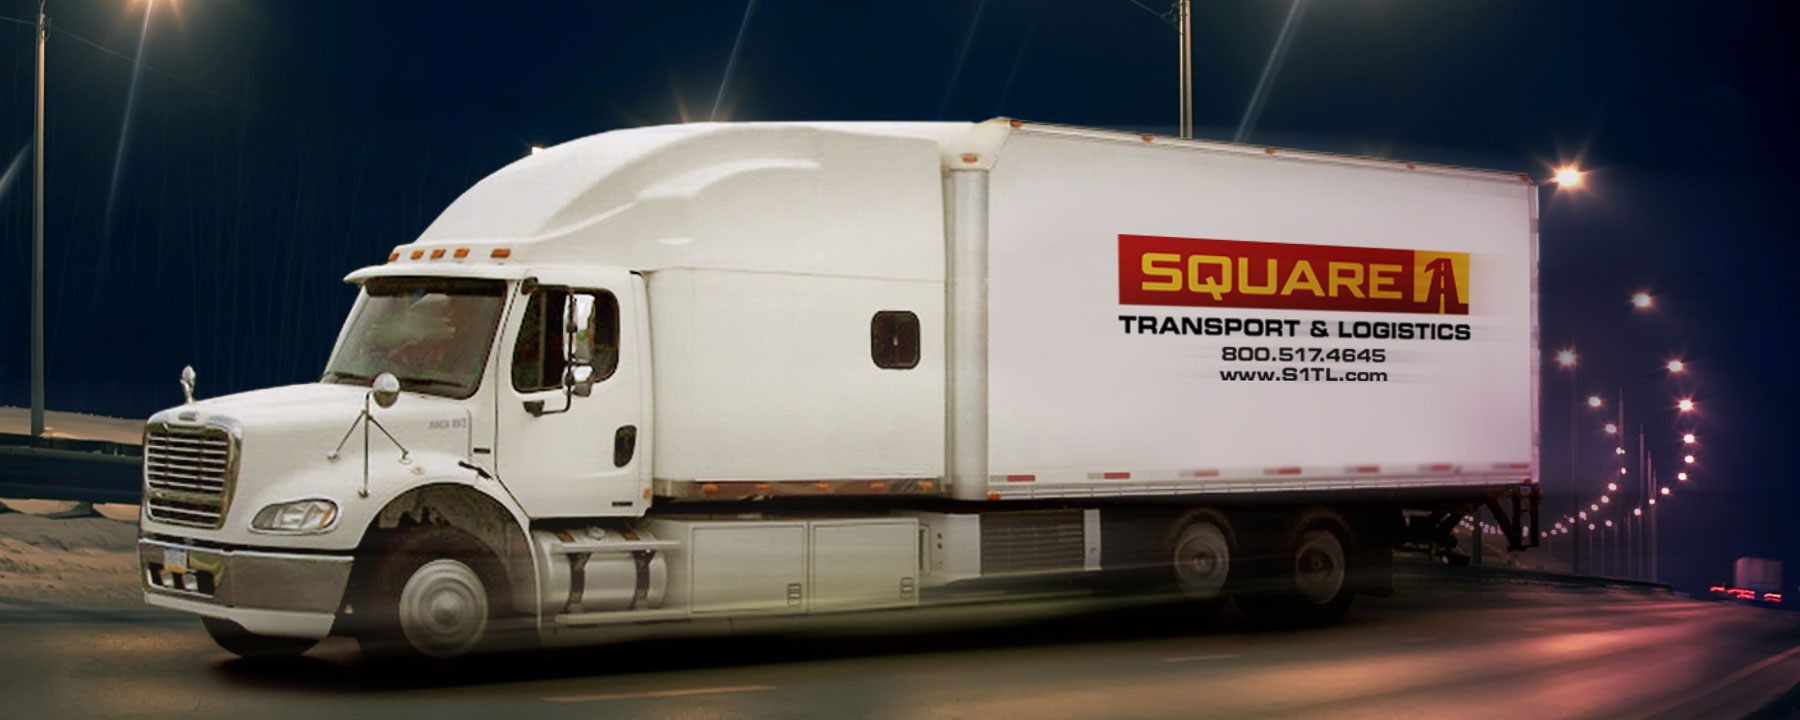 Square-One-Transport-Logistics-14